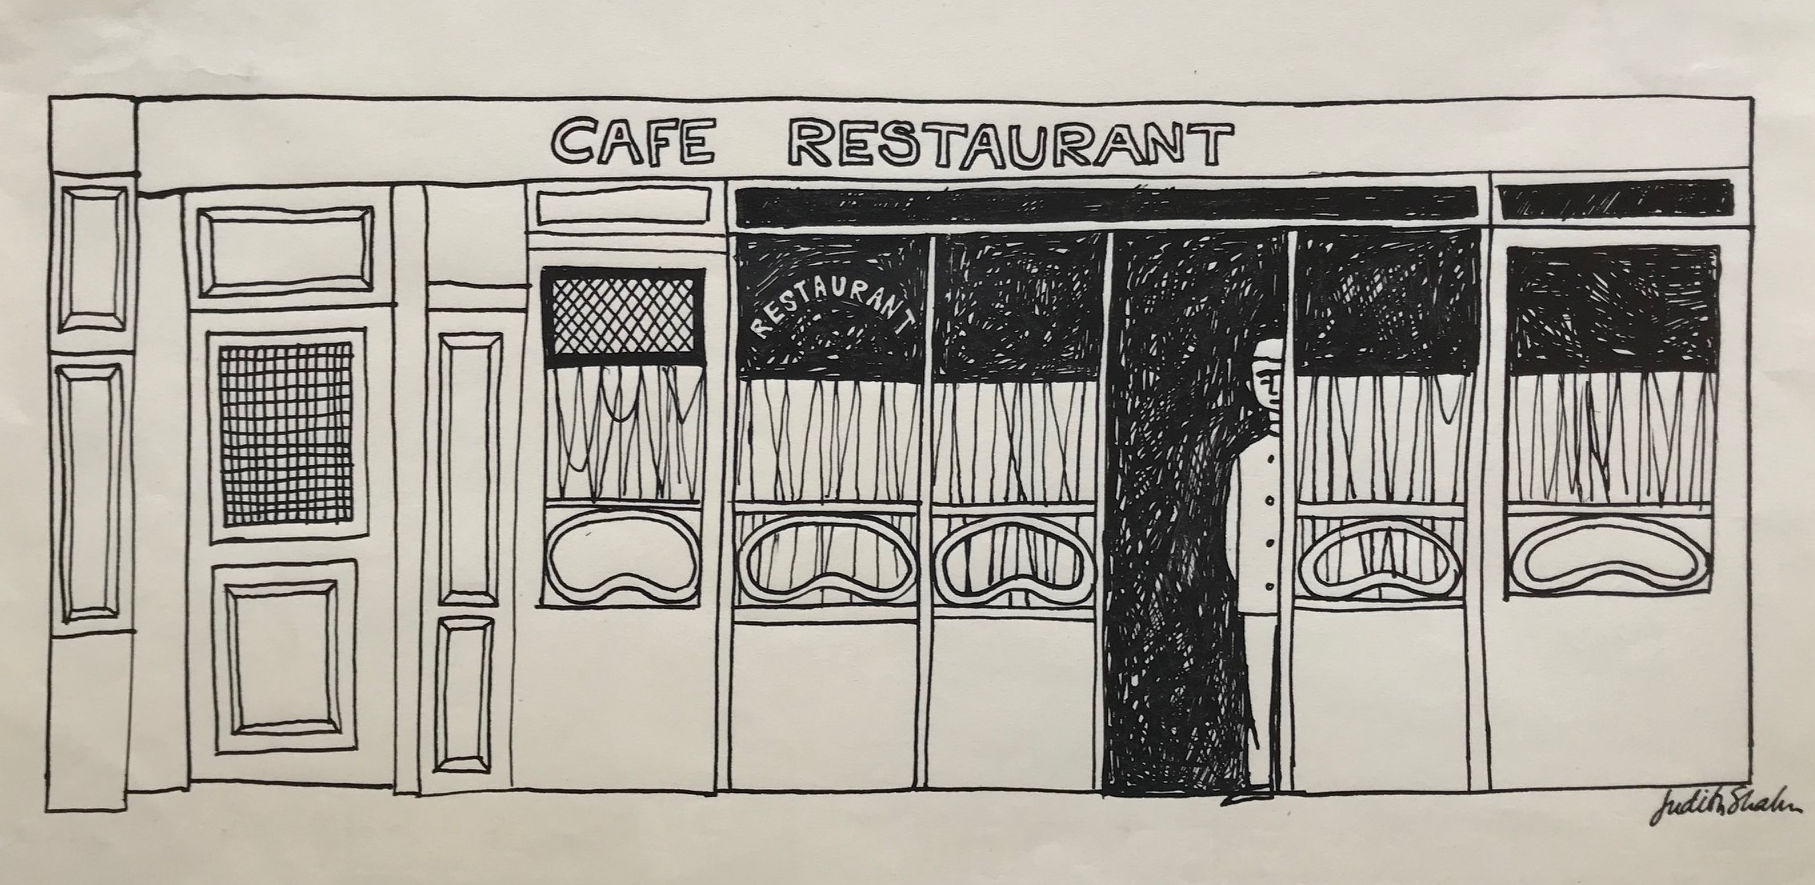 Cafe Restaurant